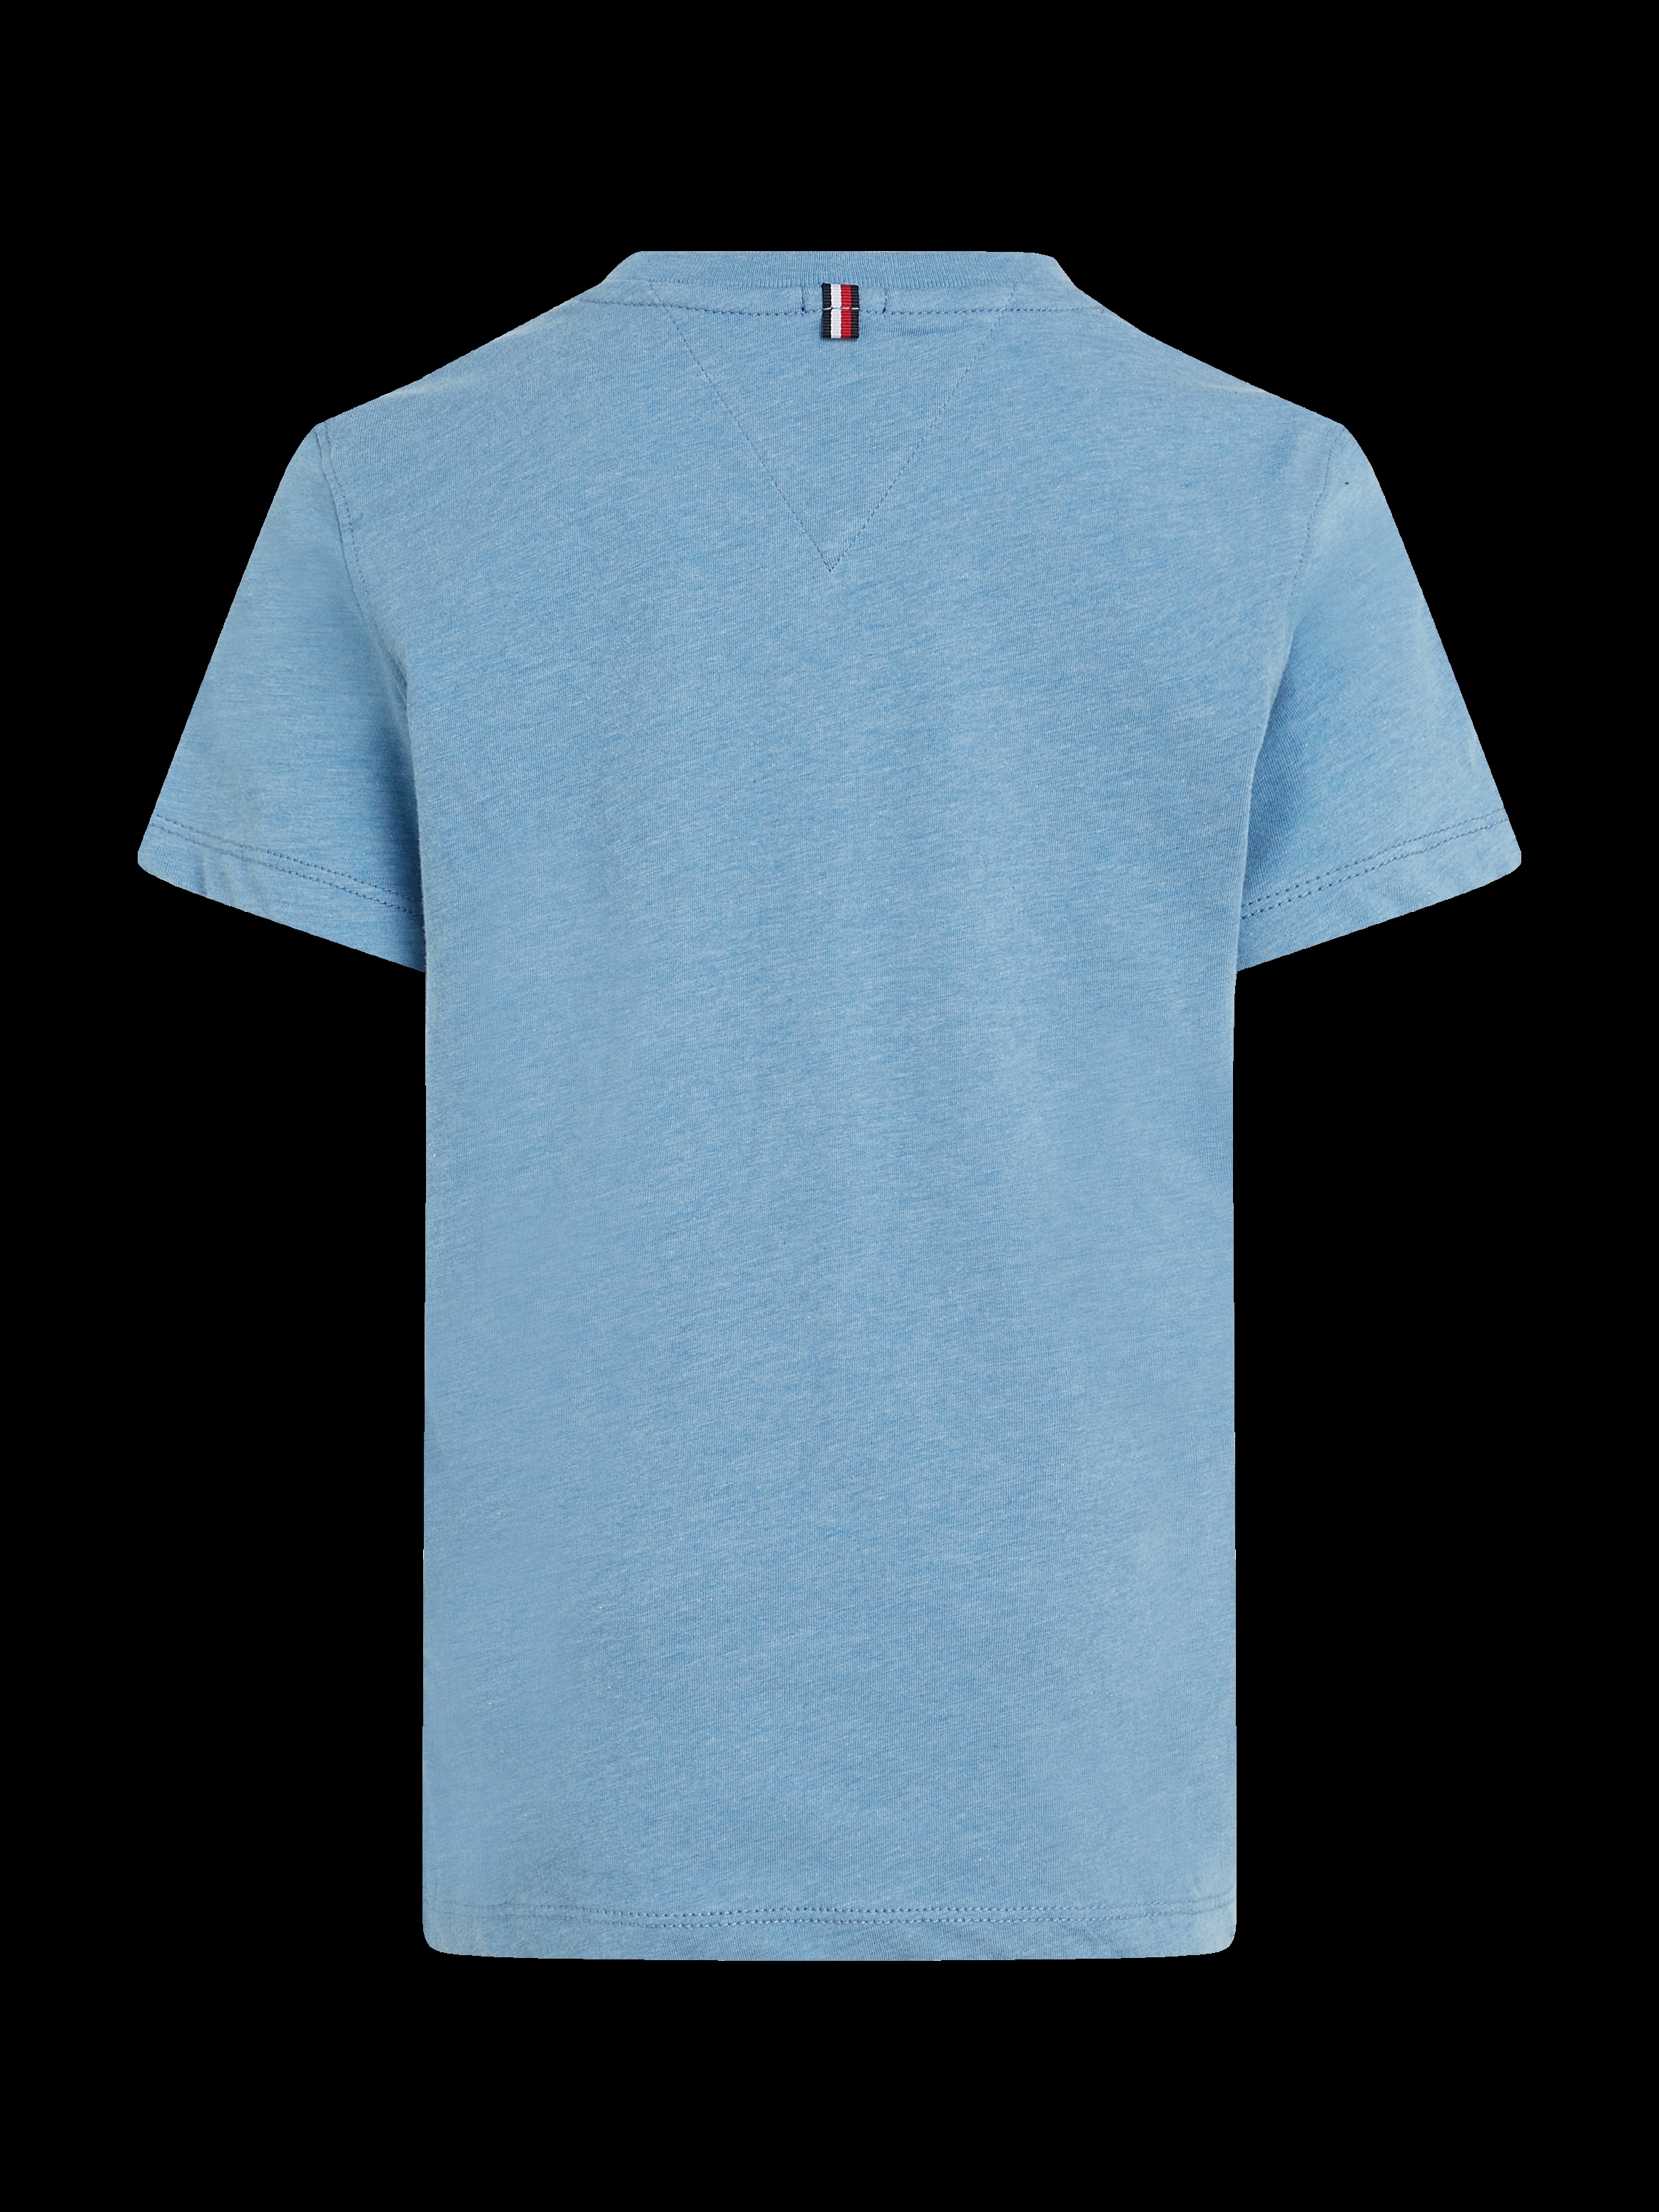 Tommy Hilfiger T-Shirt »BOYS BASIC CN KNIT«, Kinder Kids Junior MiniMe